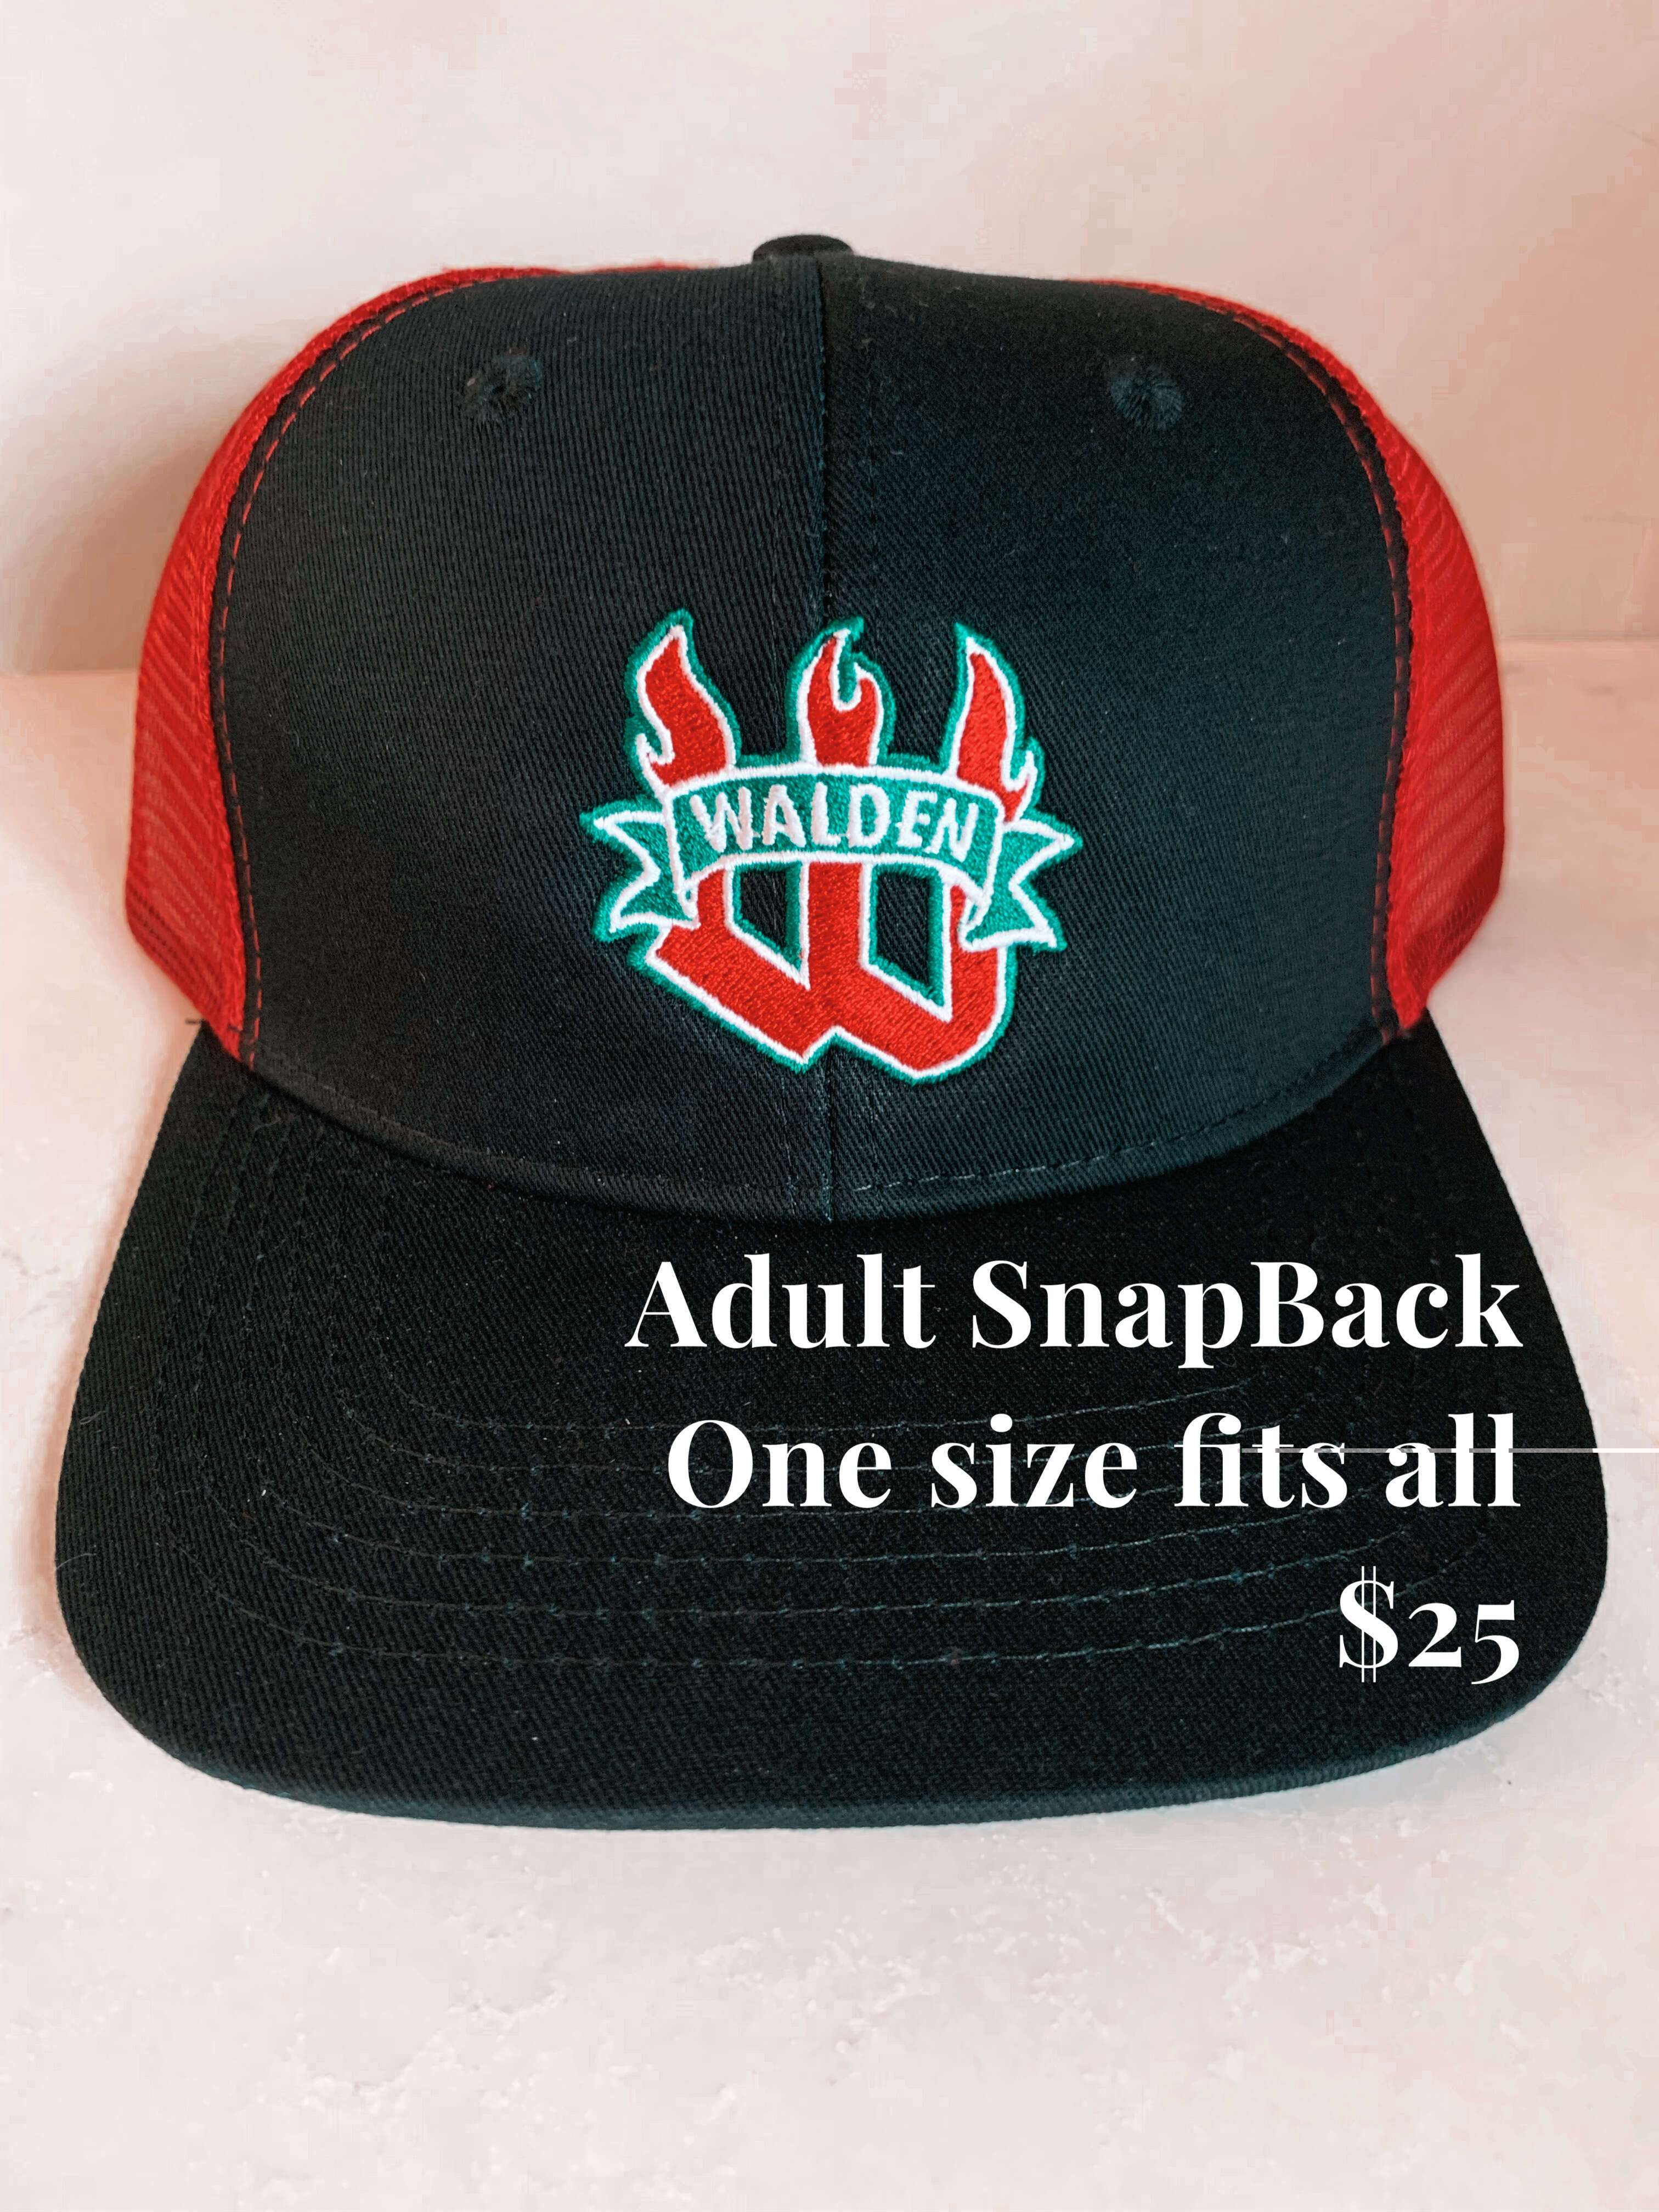 WMHA_Red_Black_snapback_hat.JPG